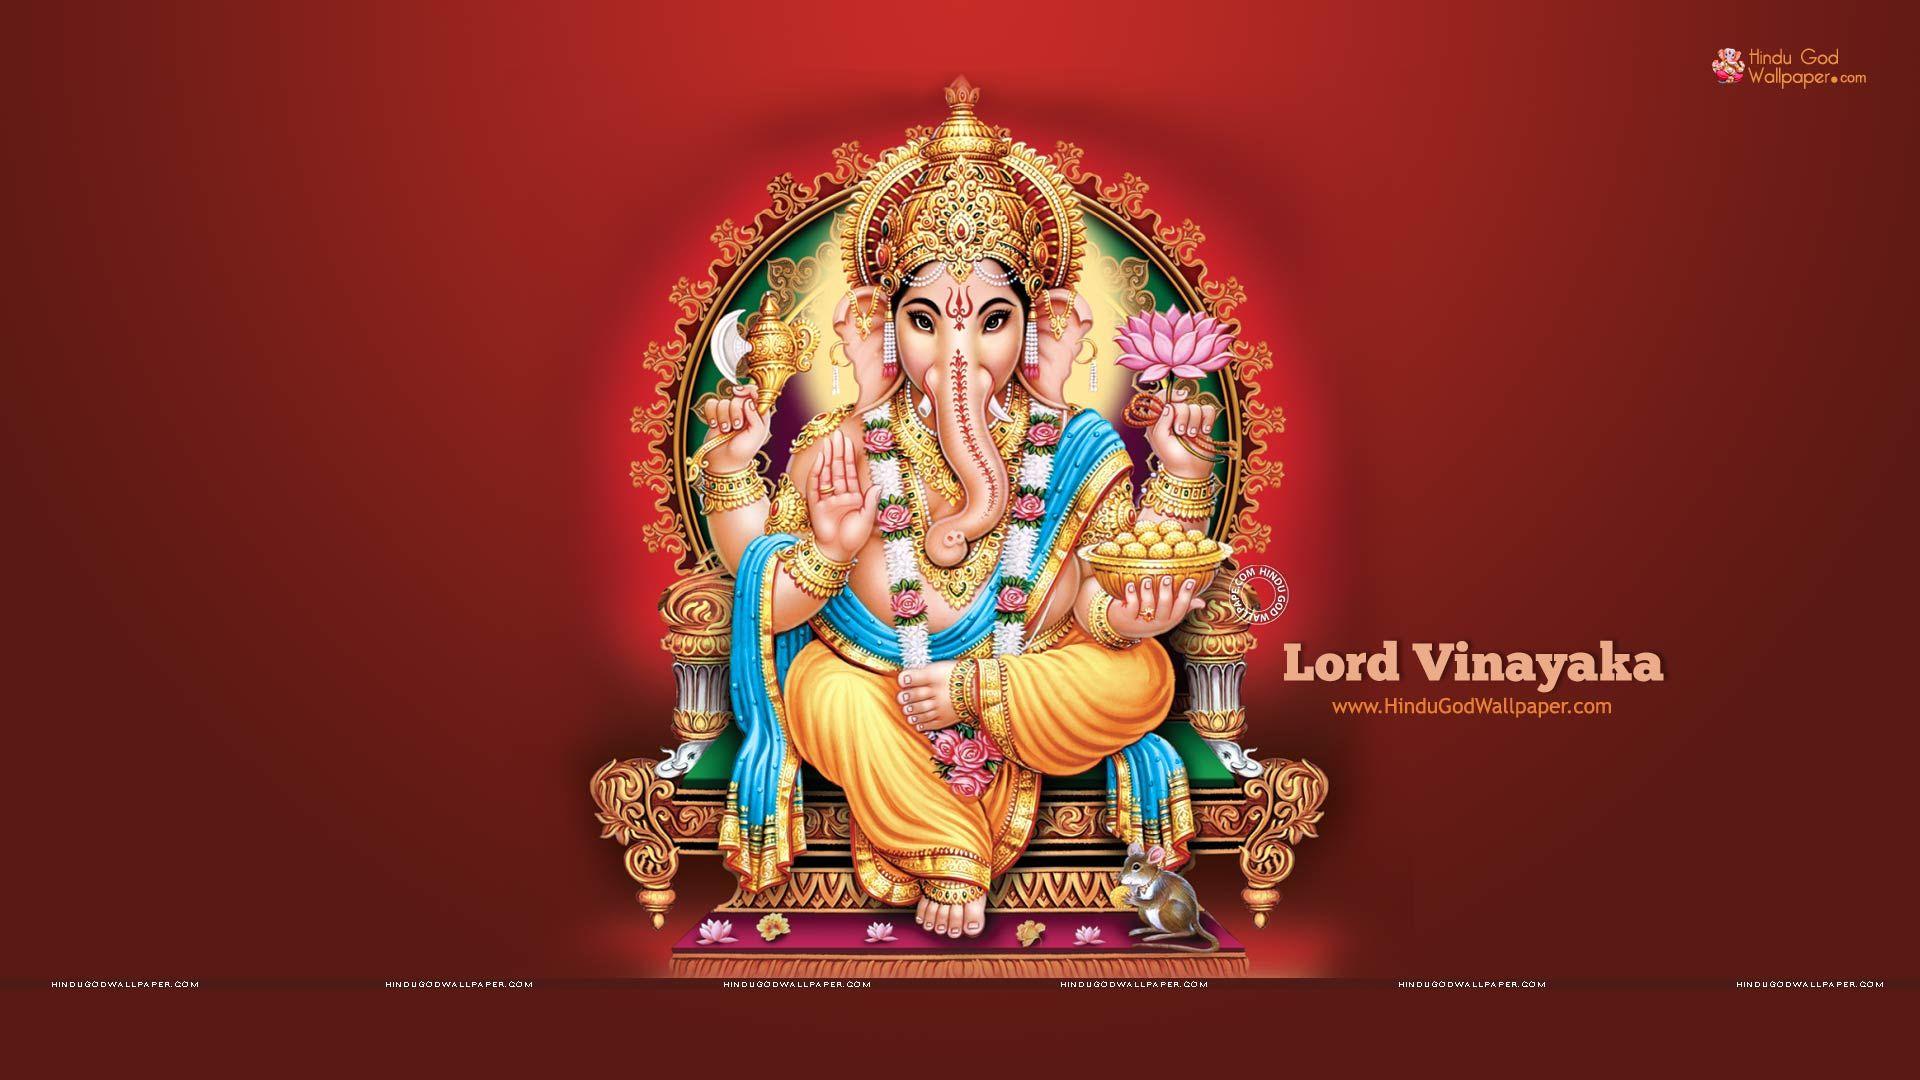 Lord Vinayaka Wallpaper. Download. Ganesh wallpaper, Wallpaper